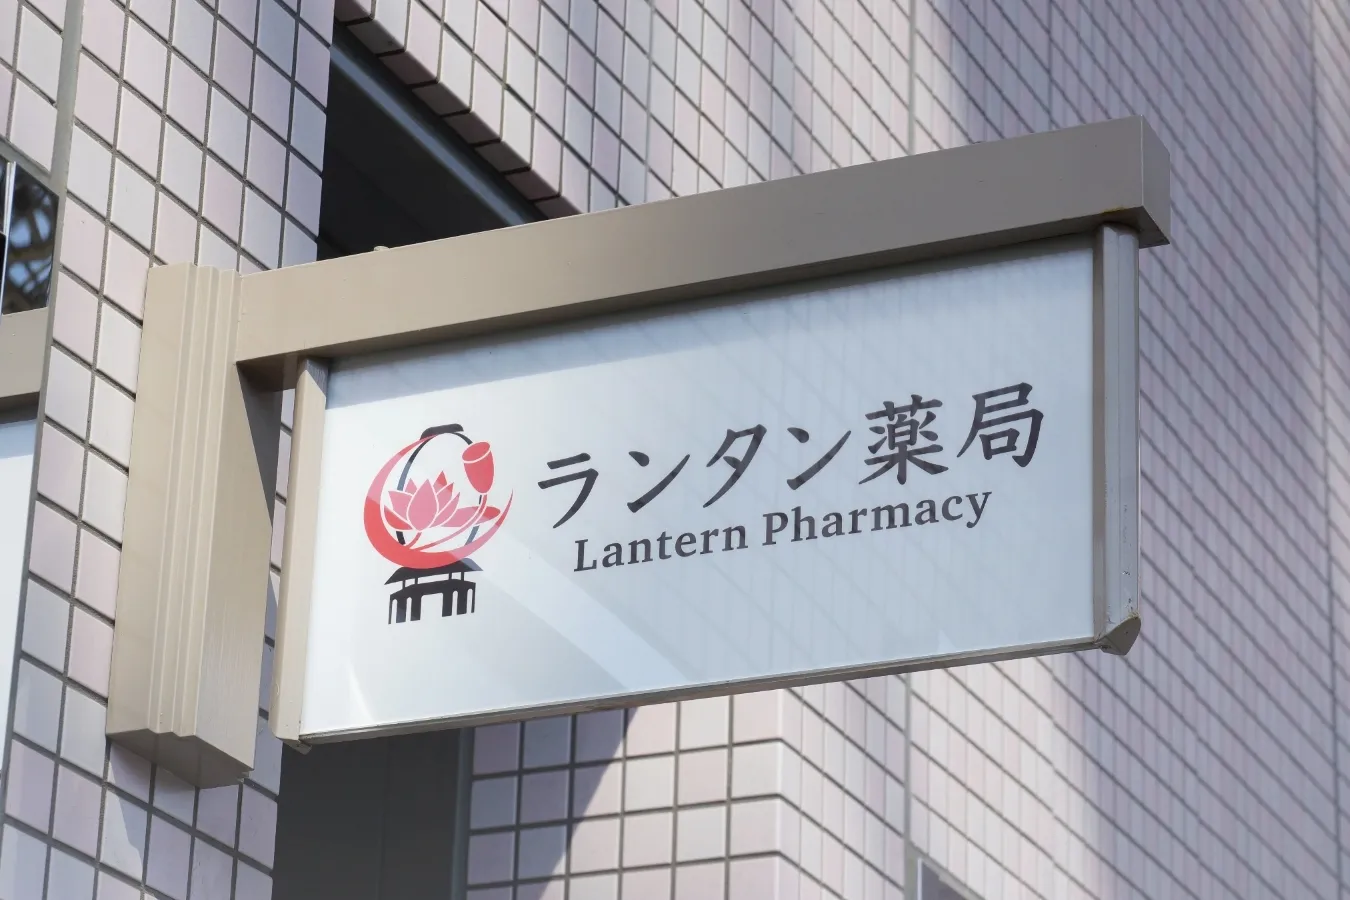 Lantern pharmacy sign